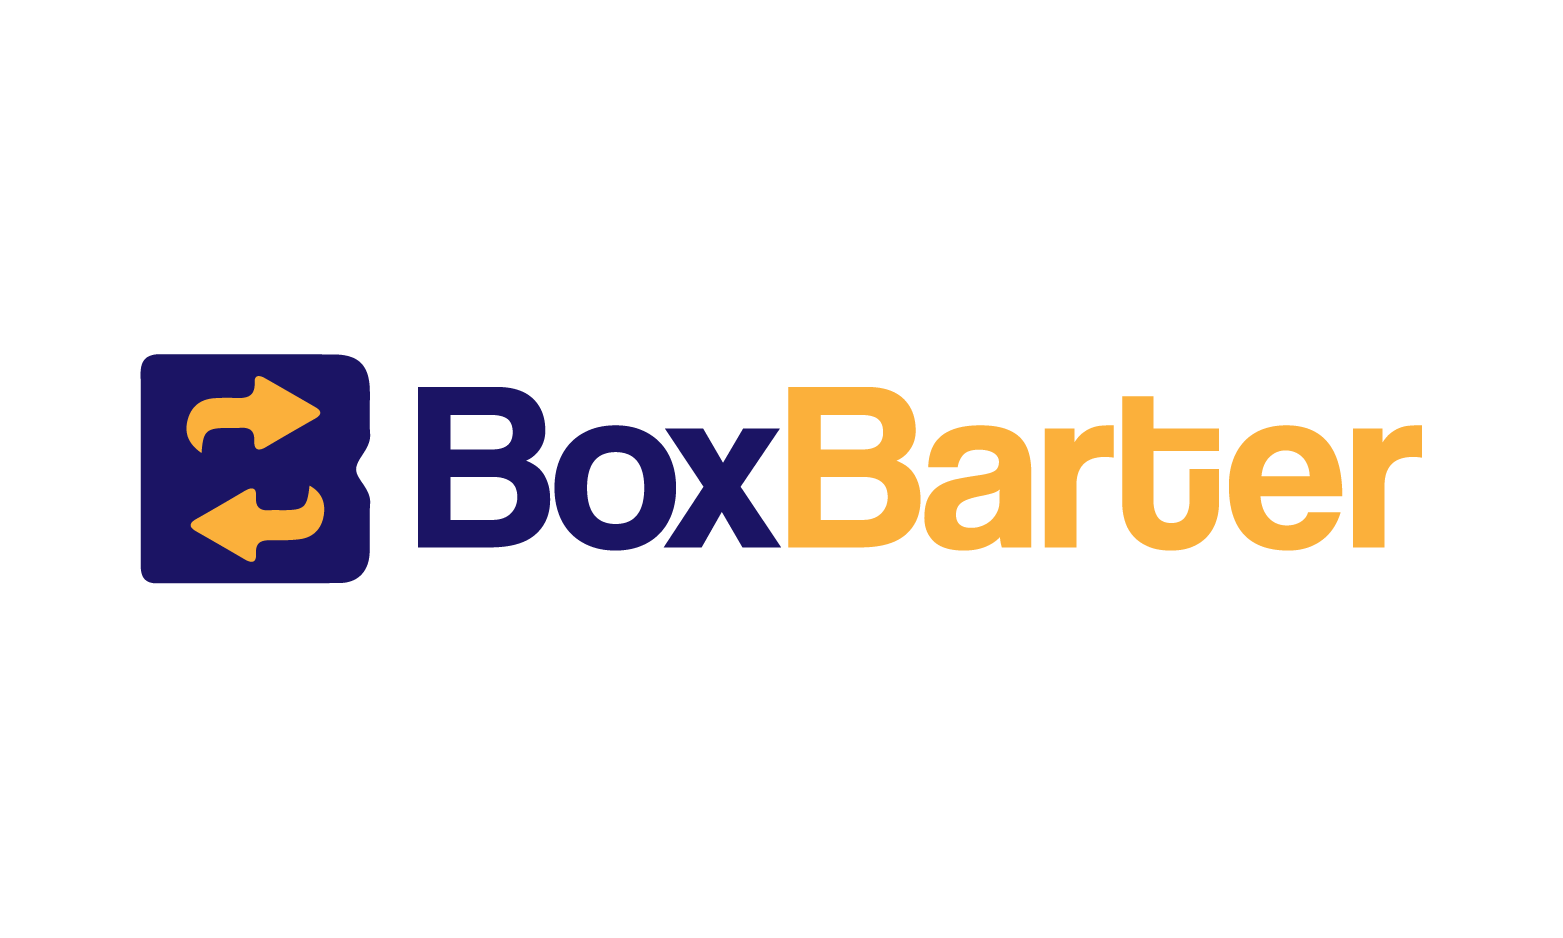 BoxBarter.com - Creative brandable domain for sale